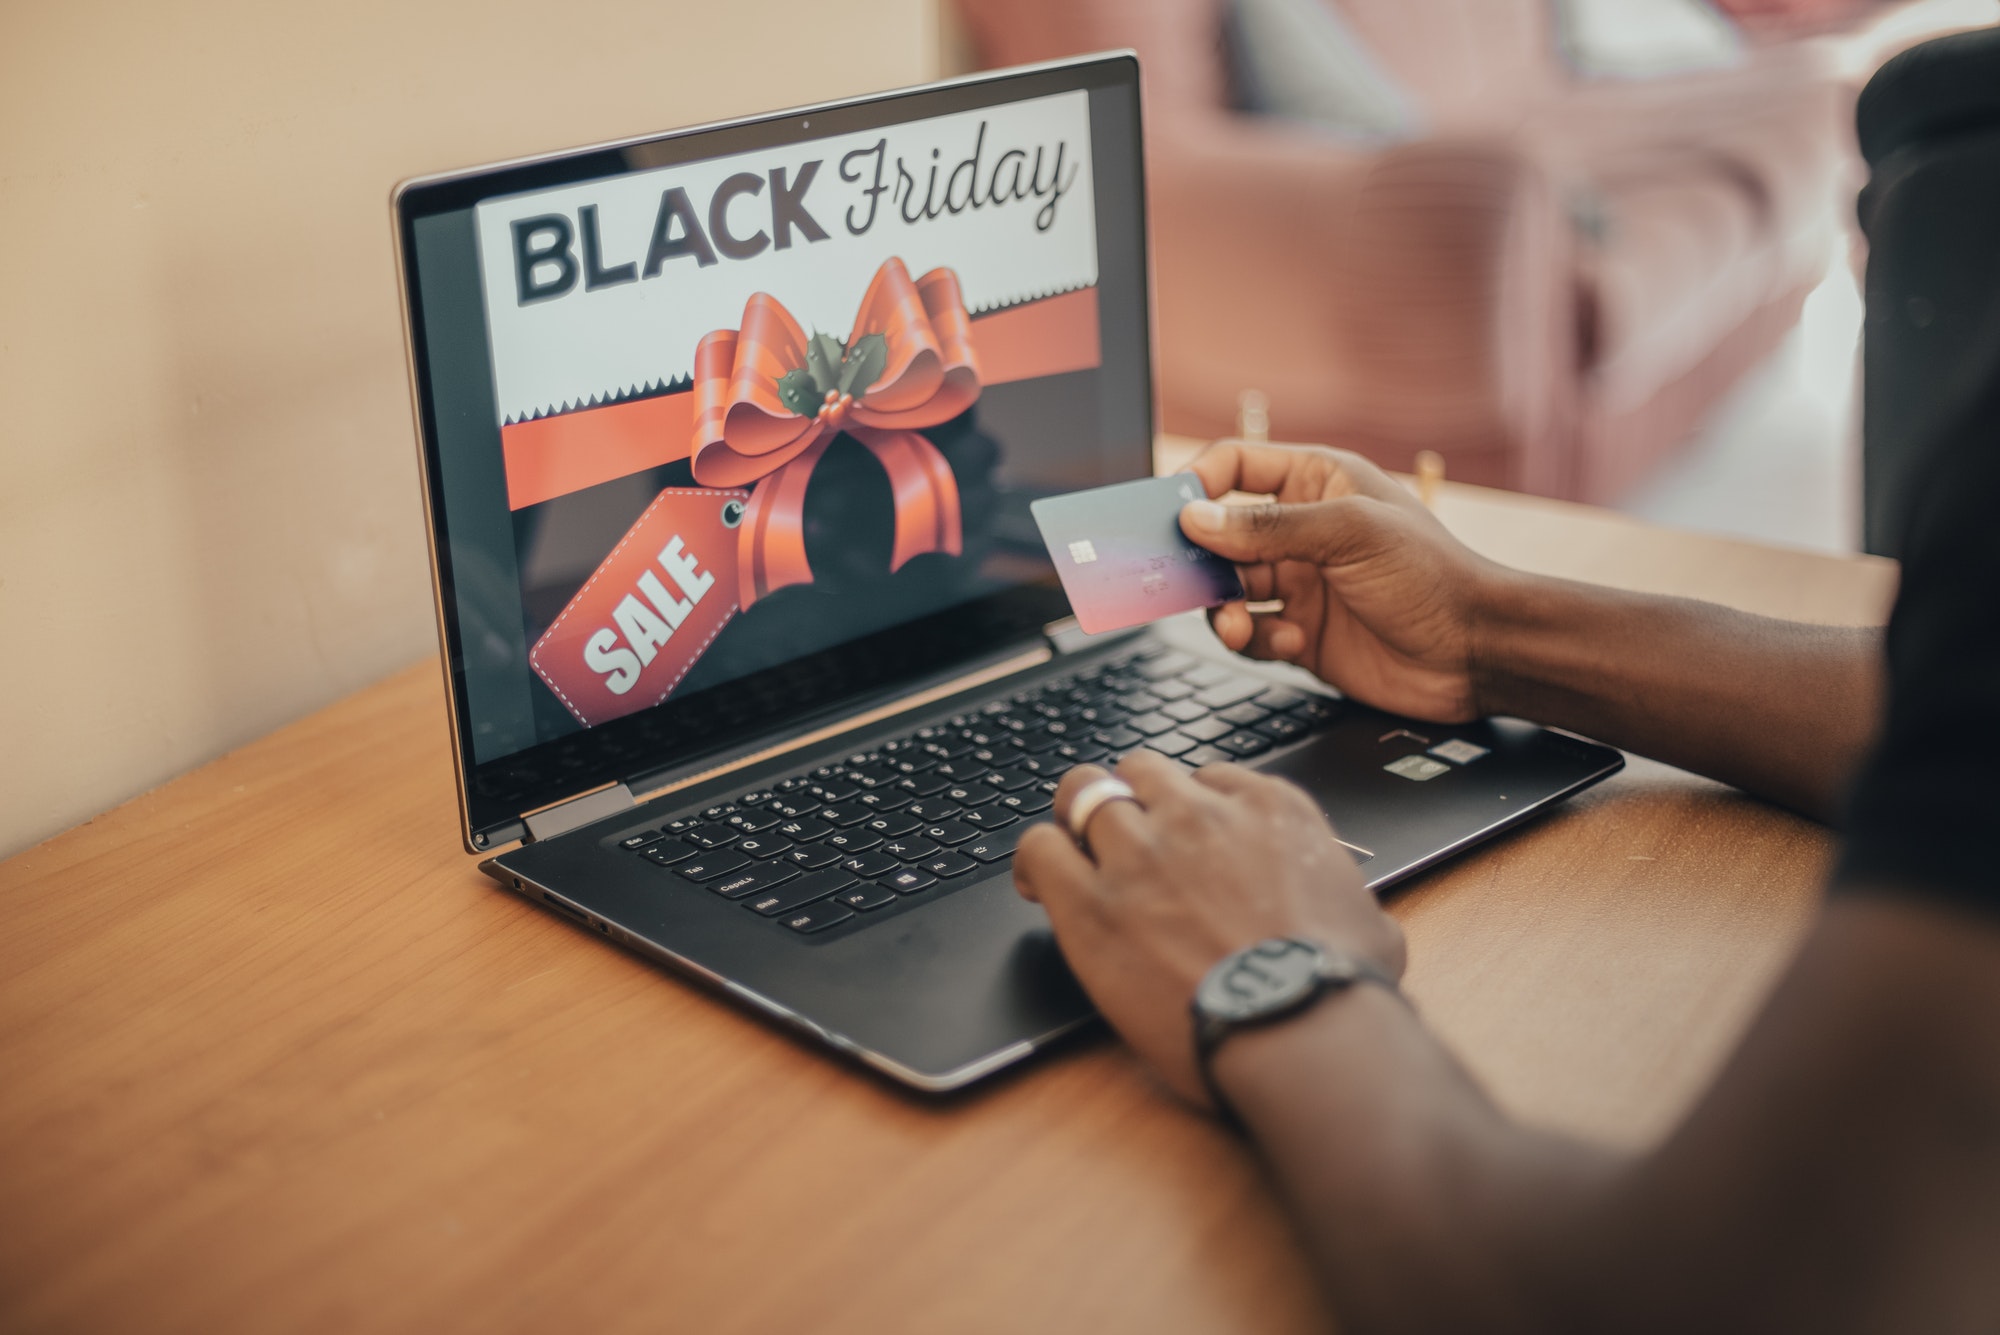 Black Friday: Procon Alerta sobre Sites a Serem Evitados Durante as Promoções